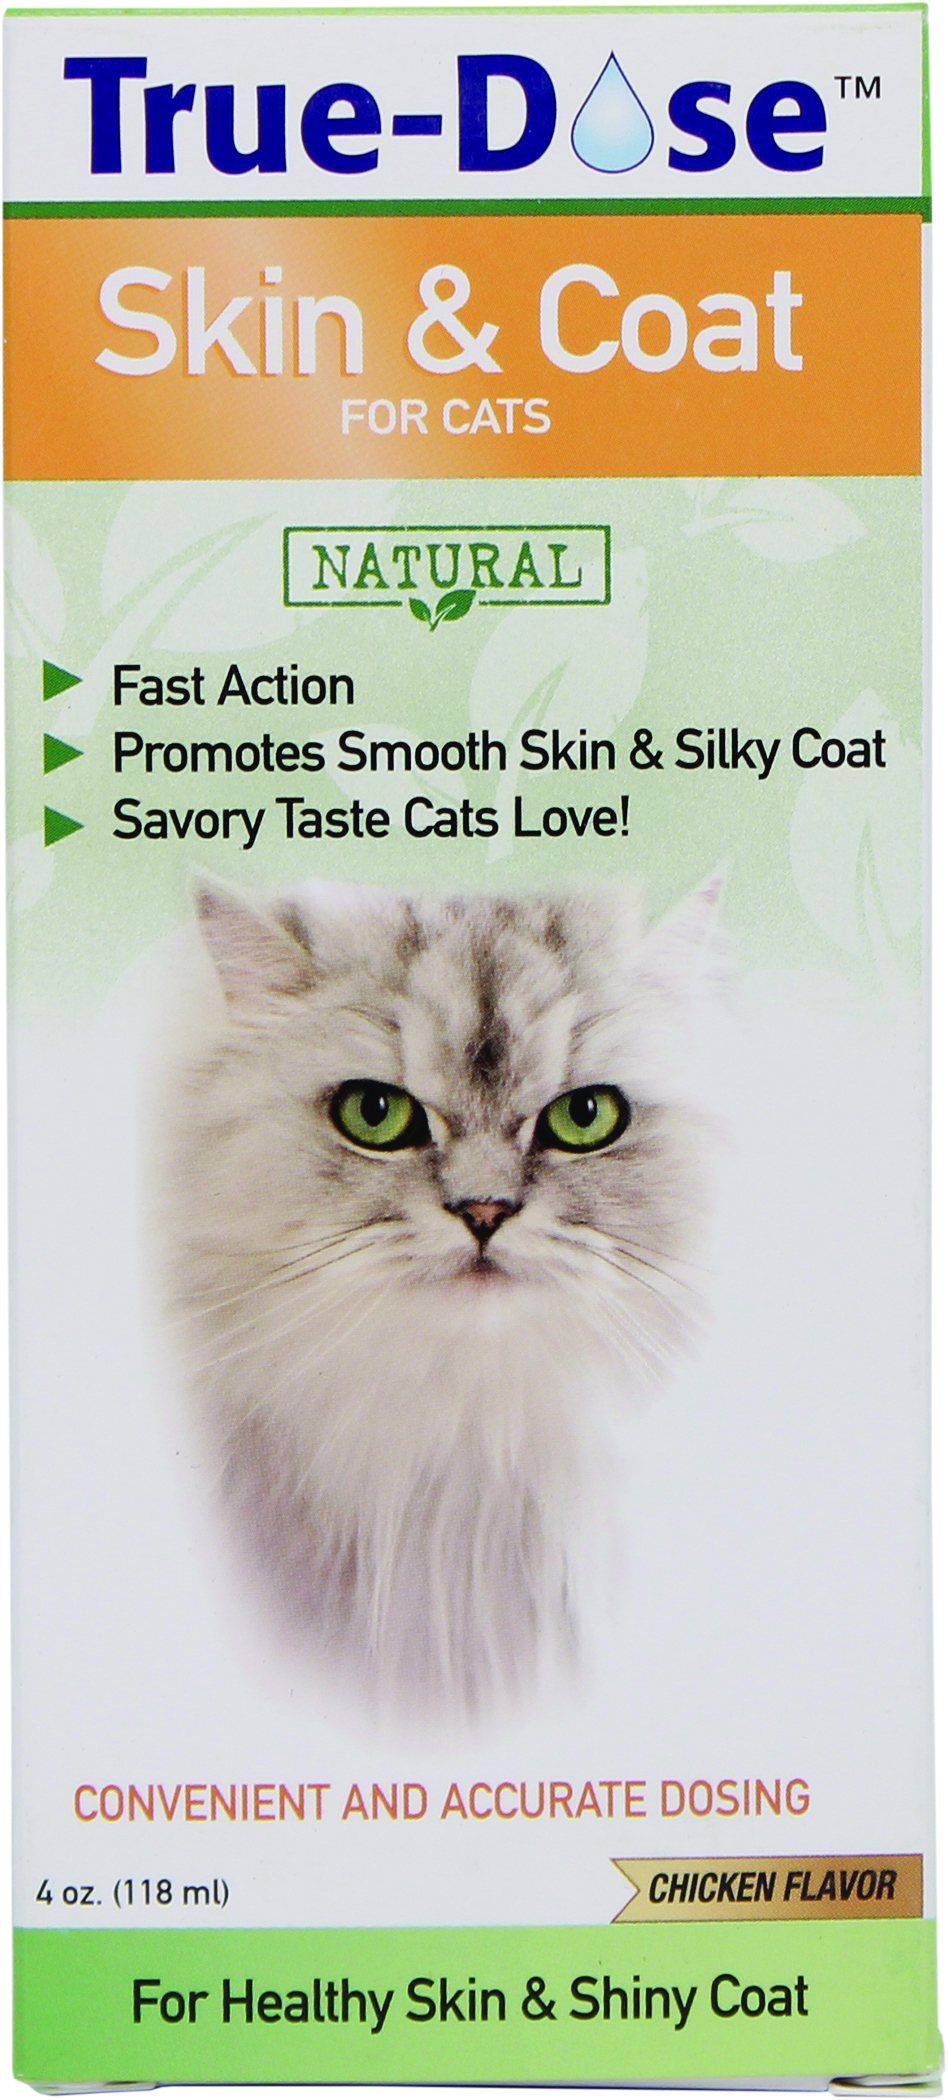 TRUE DOSE SKIN & COAT FOR CATS